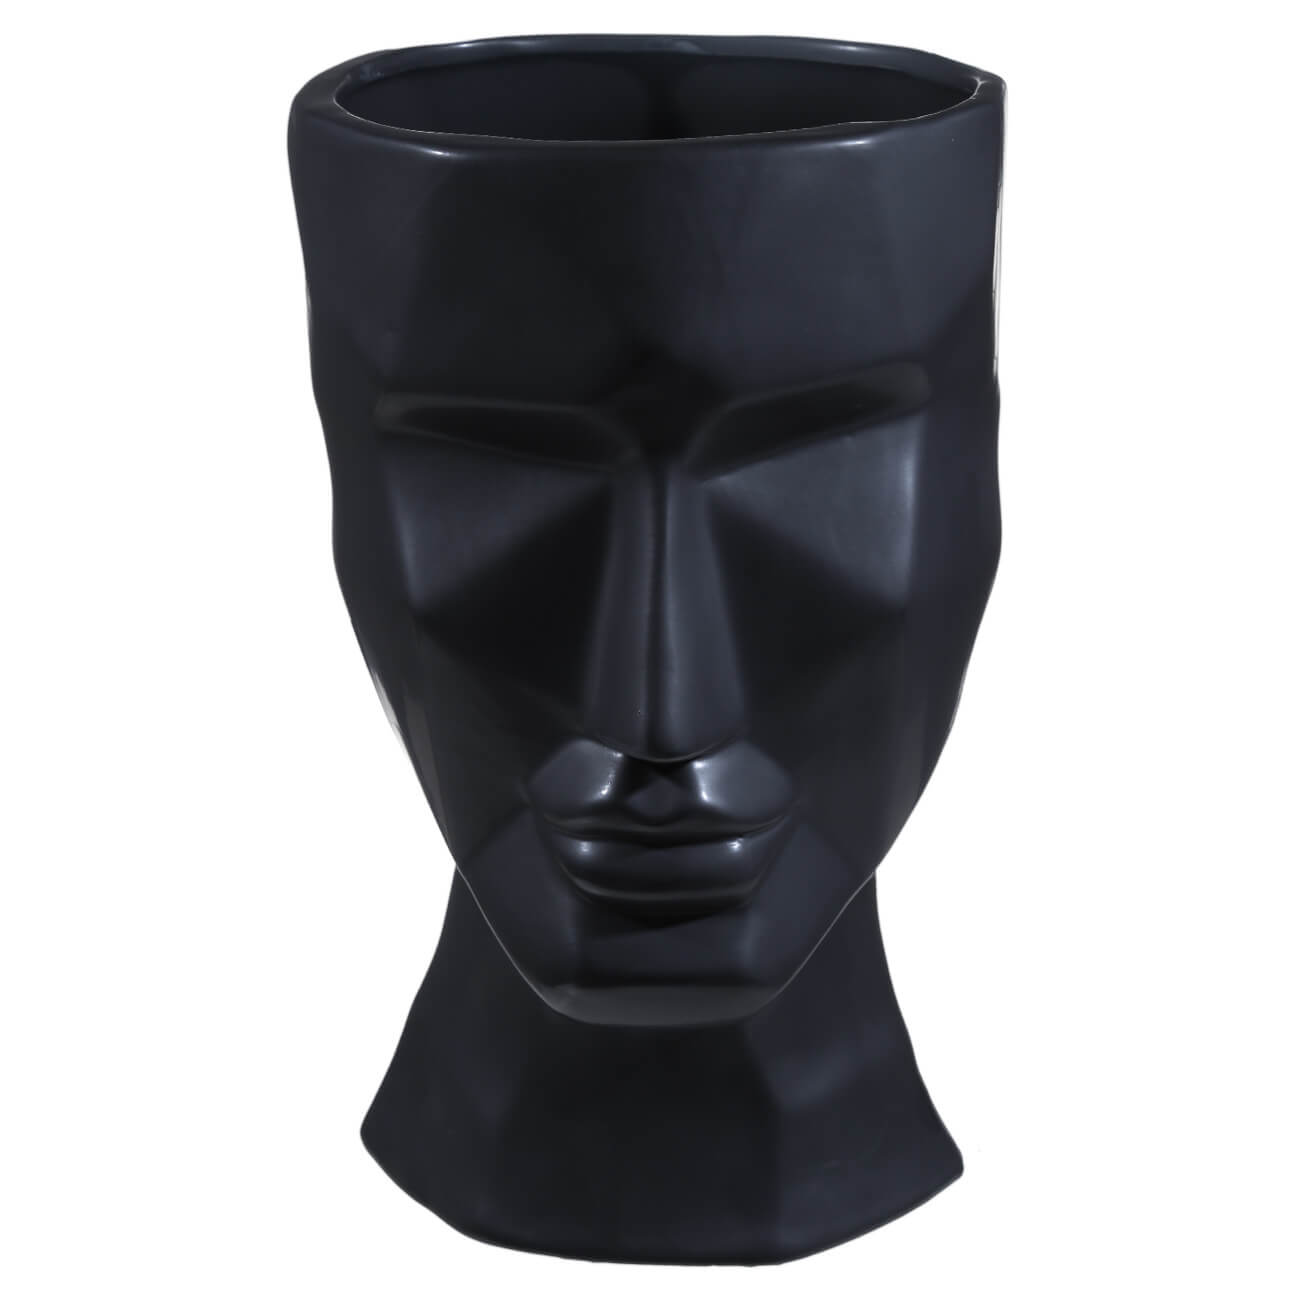 Ваза для цветов, 29 см, декоративная, керамика, черная, Графичное лицо, Face dame jeanne smoke ваза l